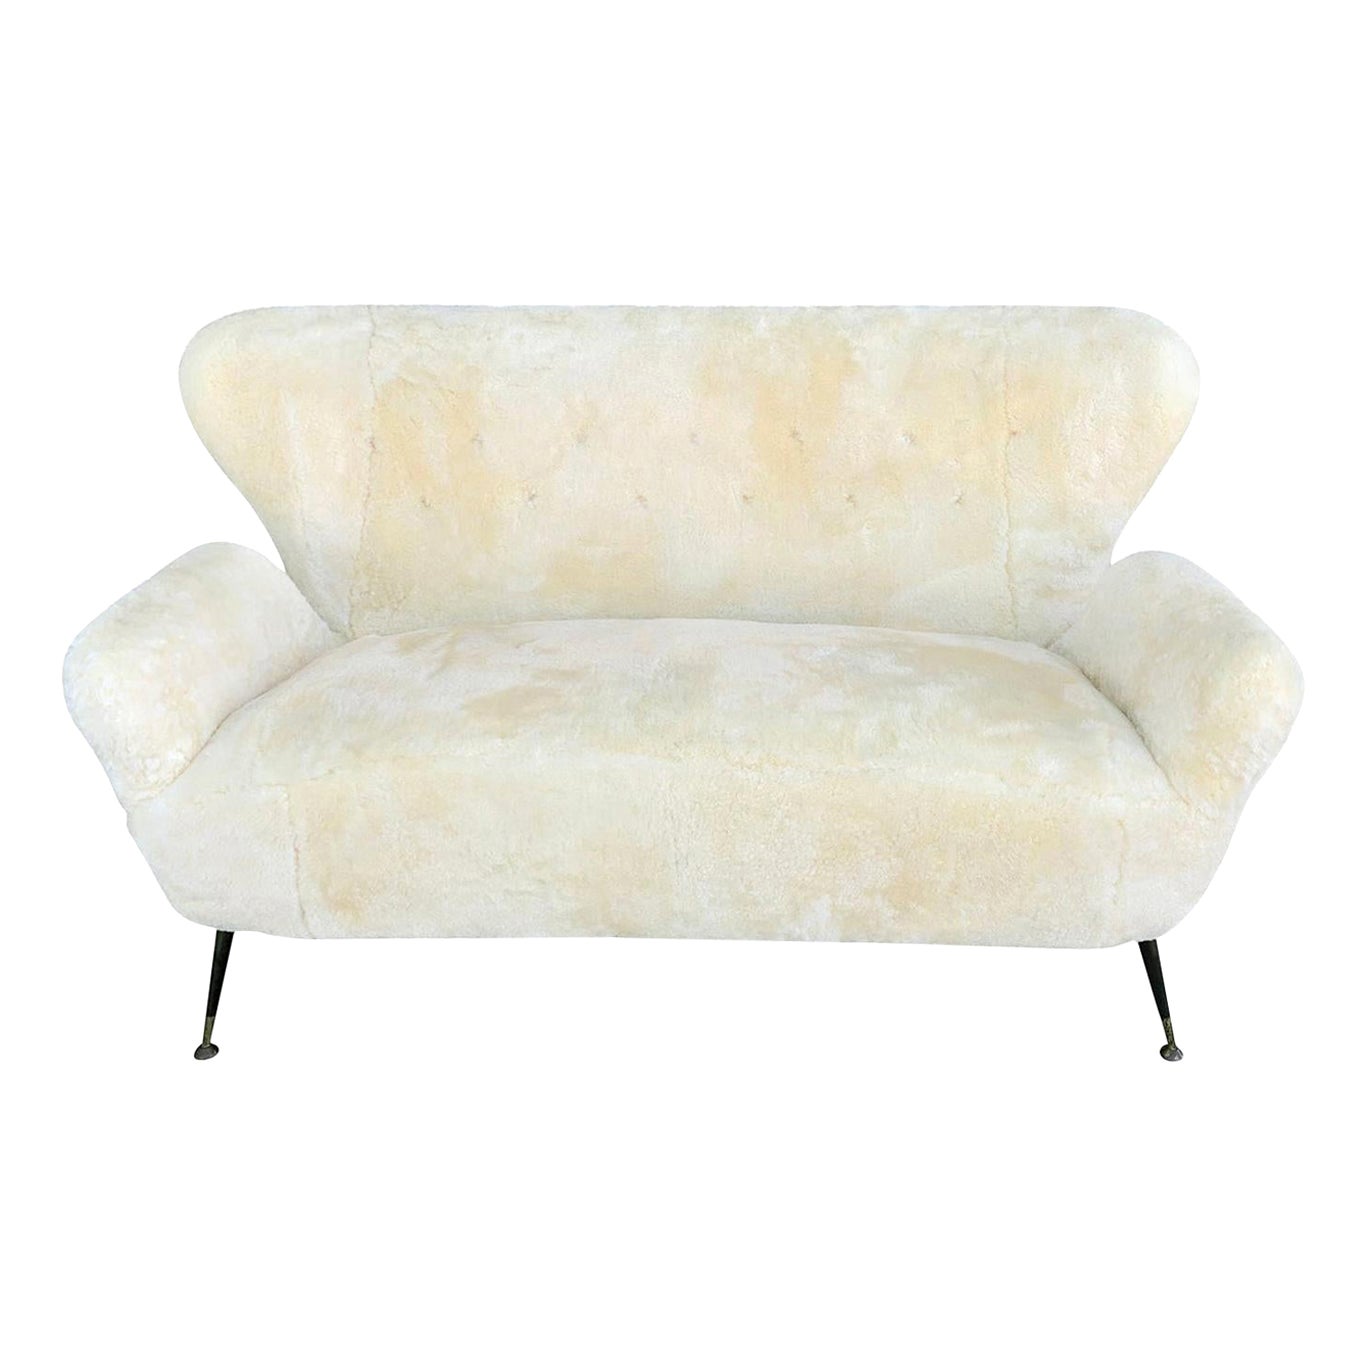 20th Century Sheepskin Divano, Italian Two-Seat Sofa Attributed to Paolo Buffa For Sale